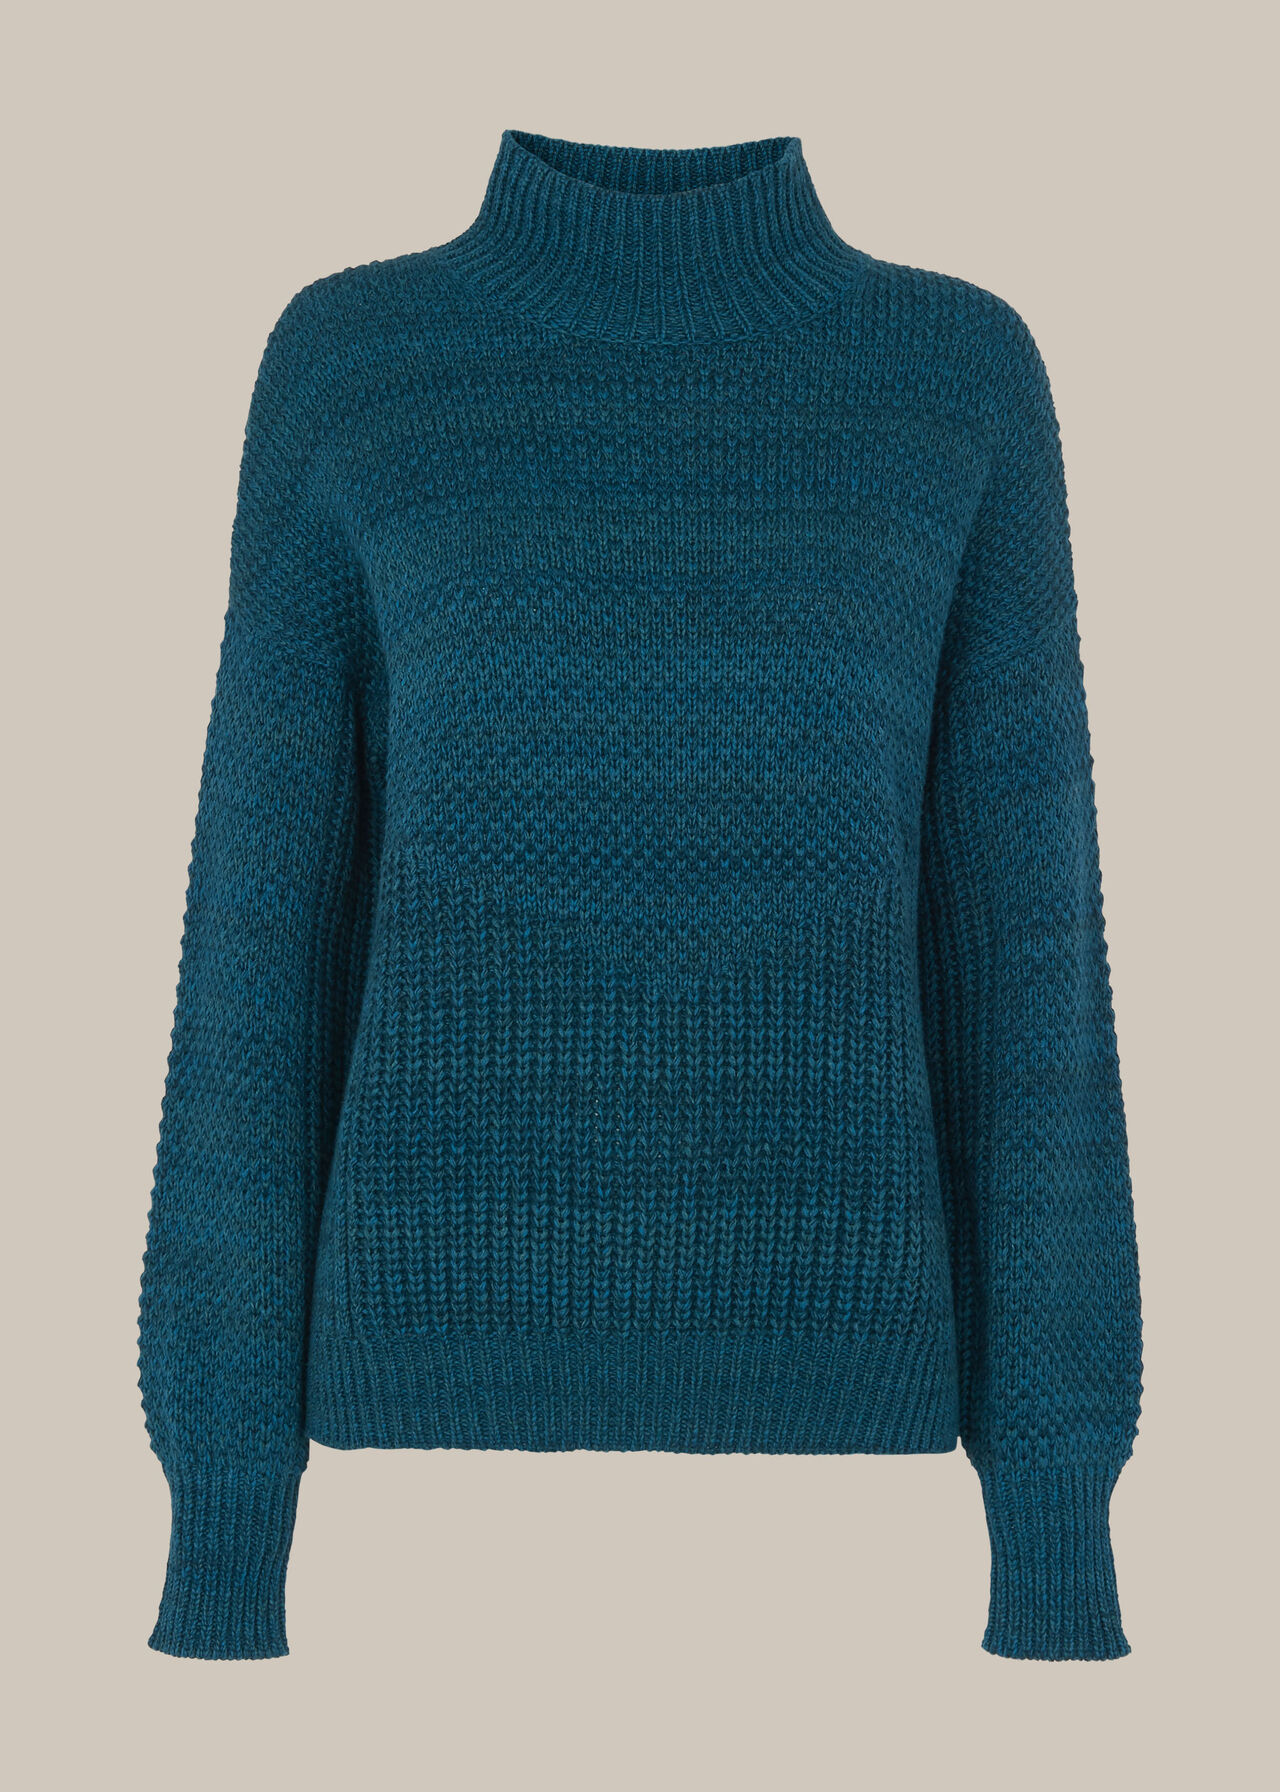 Moss Stitch Textured Knit Teal